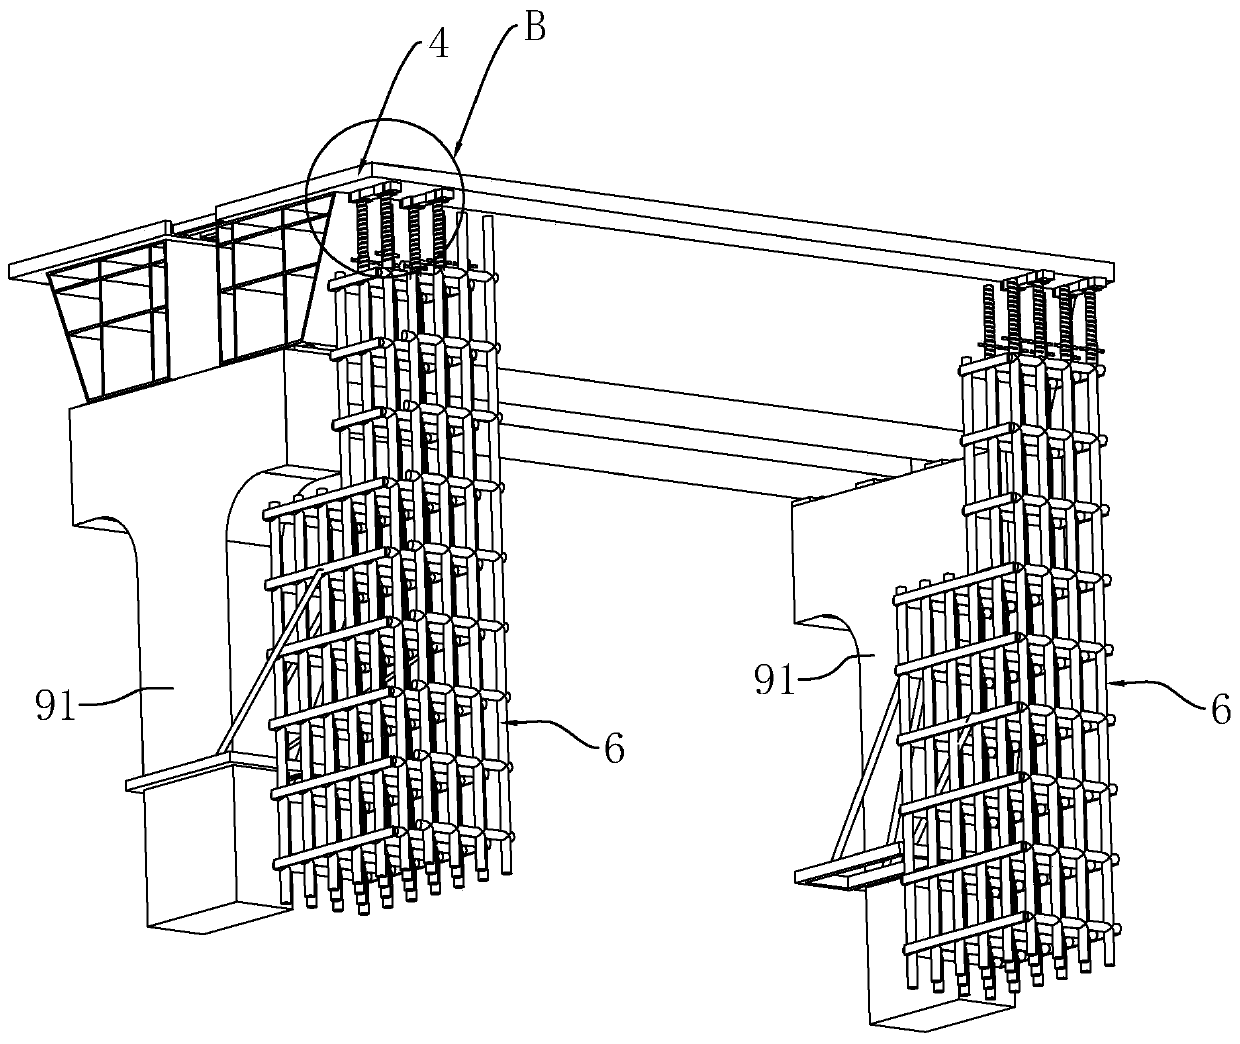 Construction method of reinforced concrete box girder